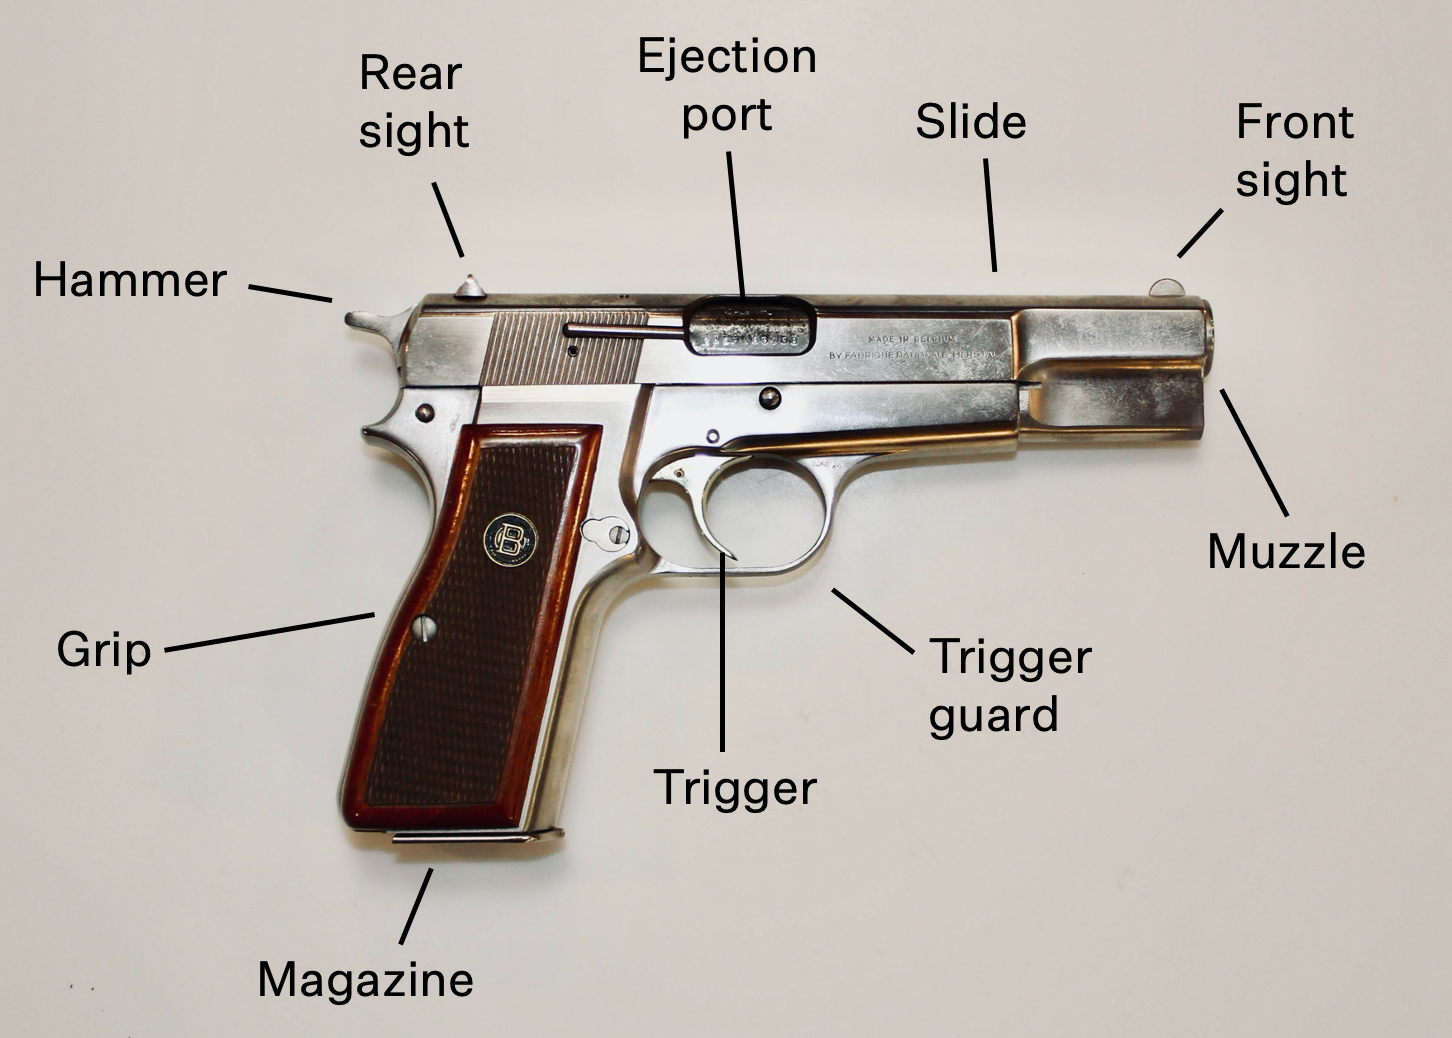 A 9mm semi-automatic pistol.